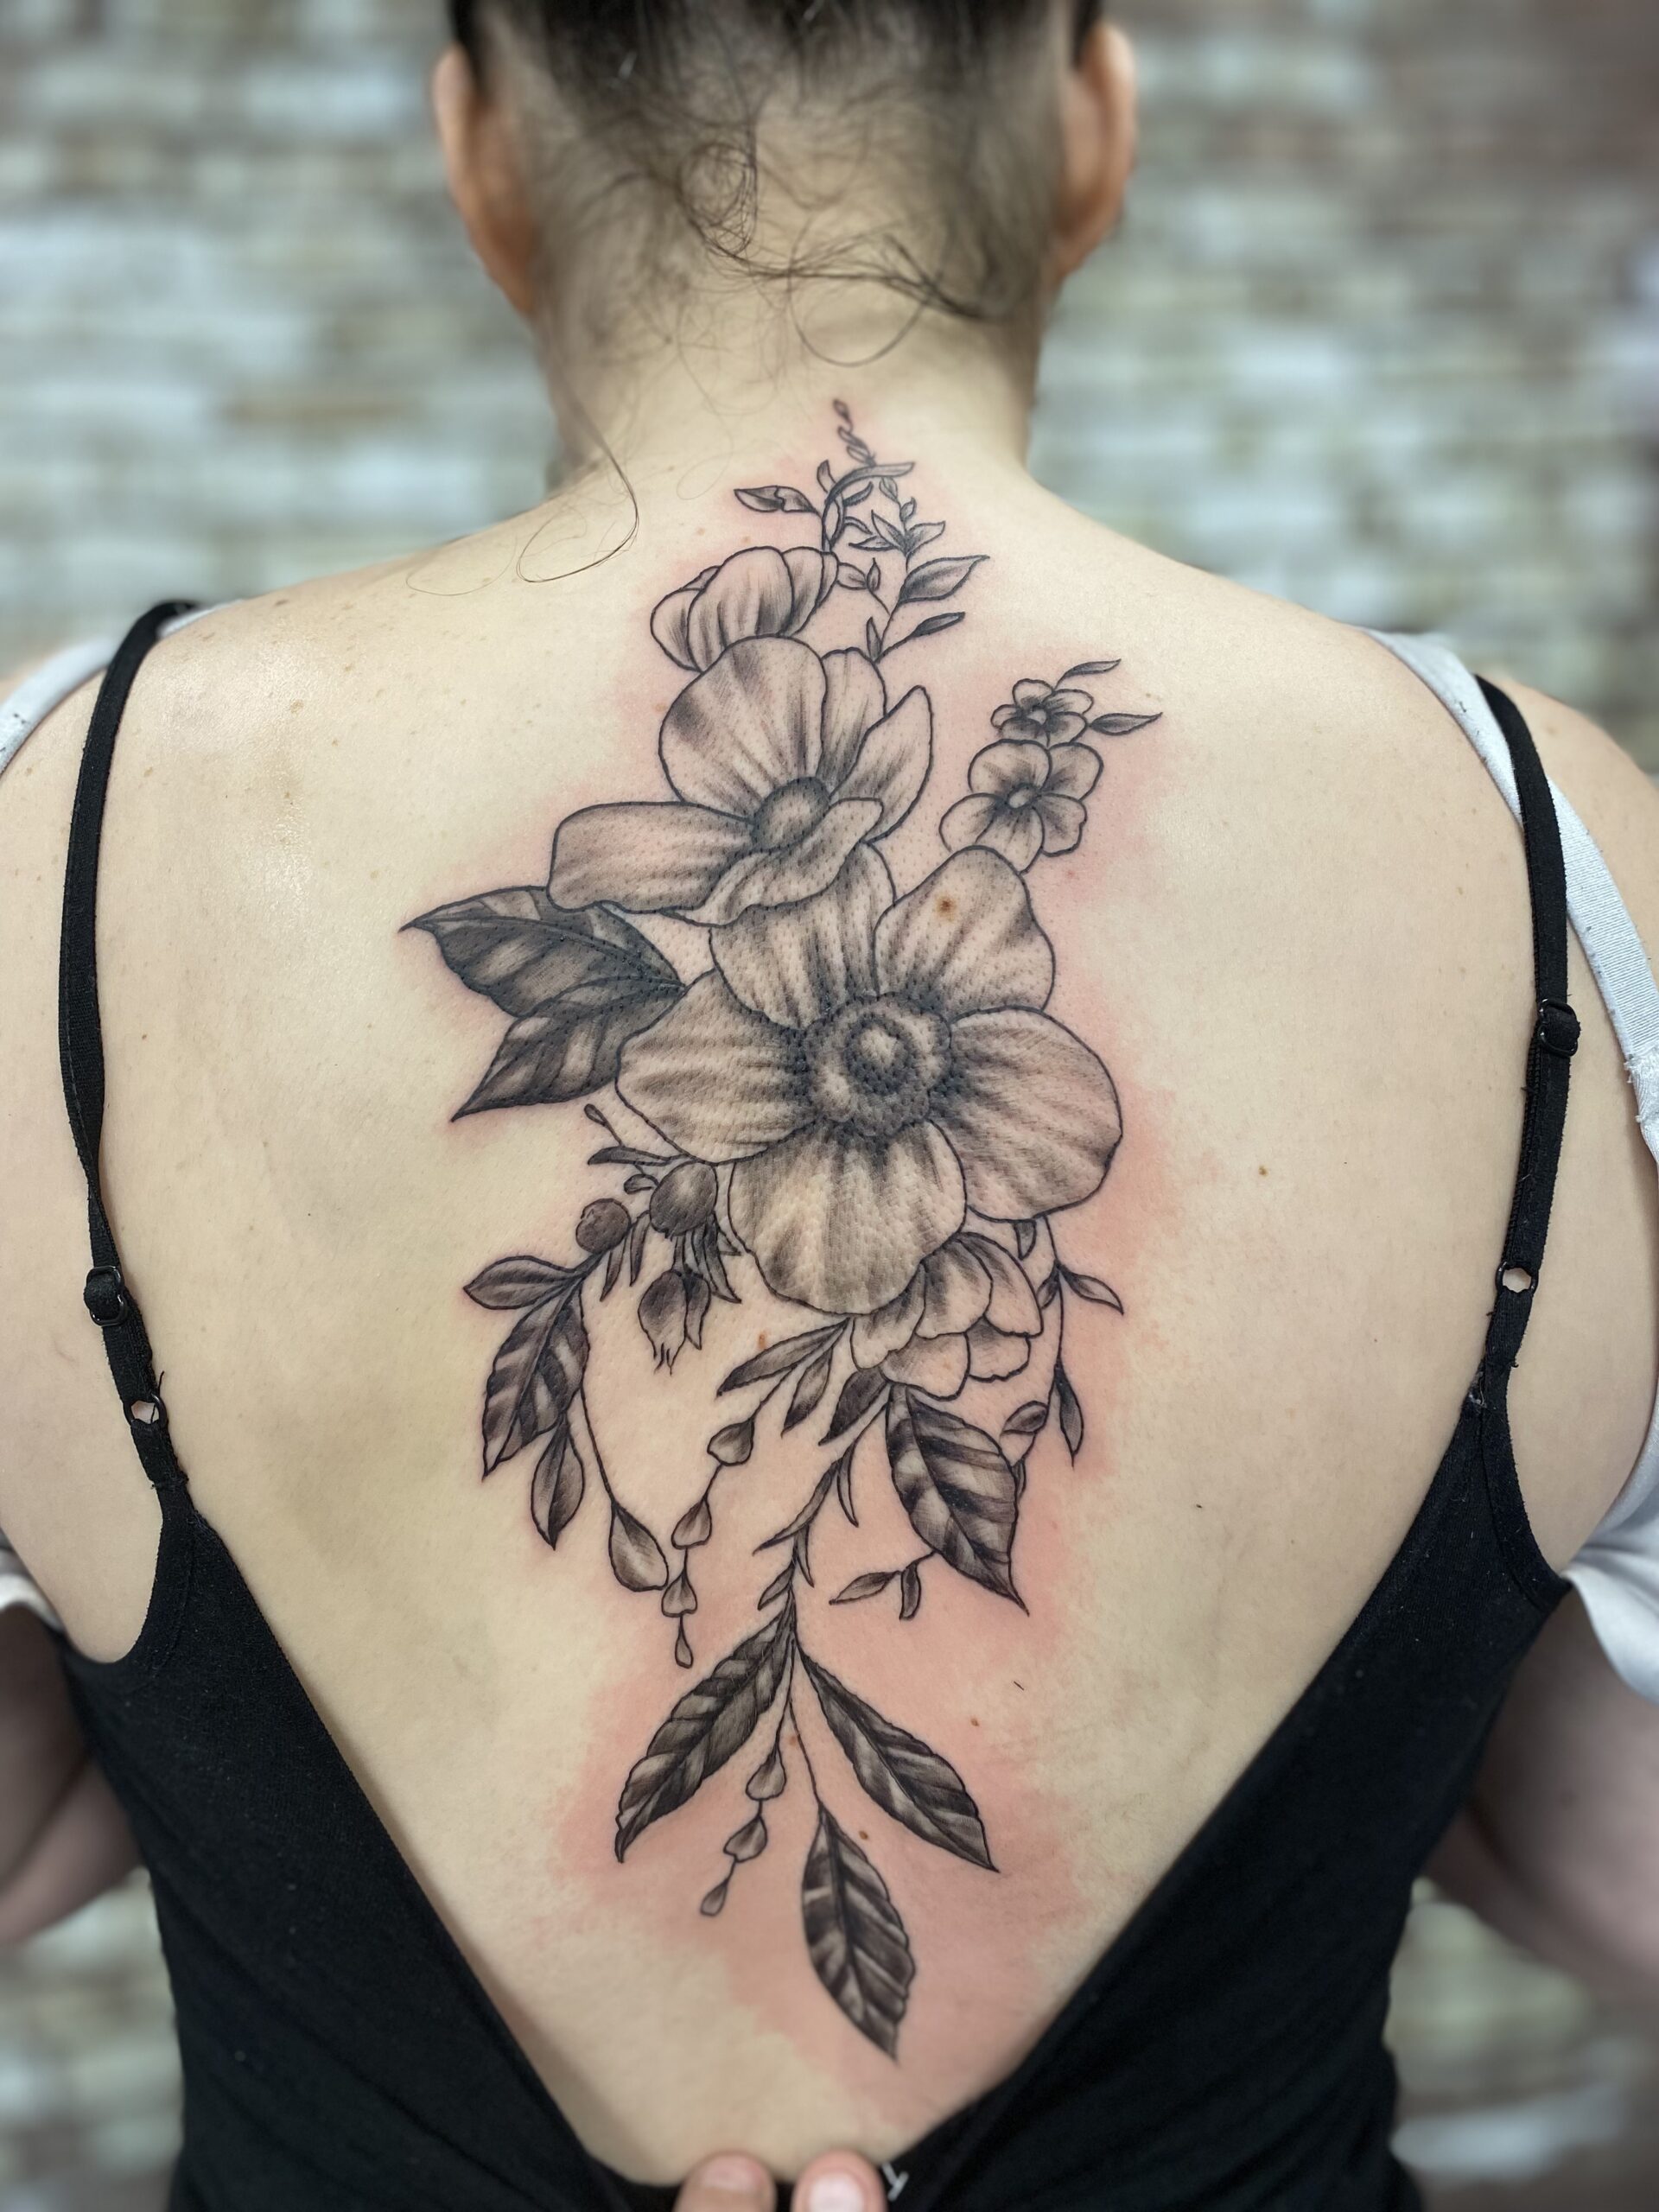 Fantastic Rose Tattoo On Shoulder - Tattoos Designs